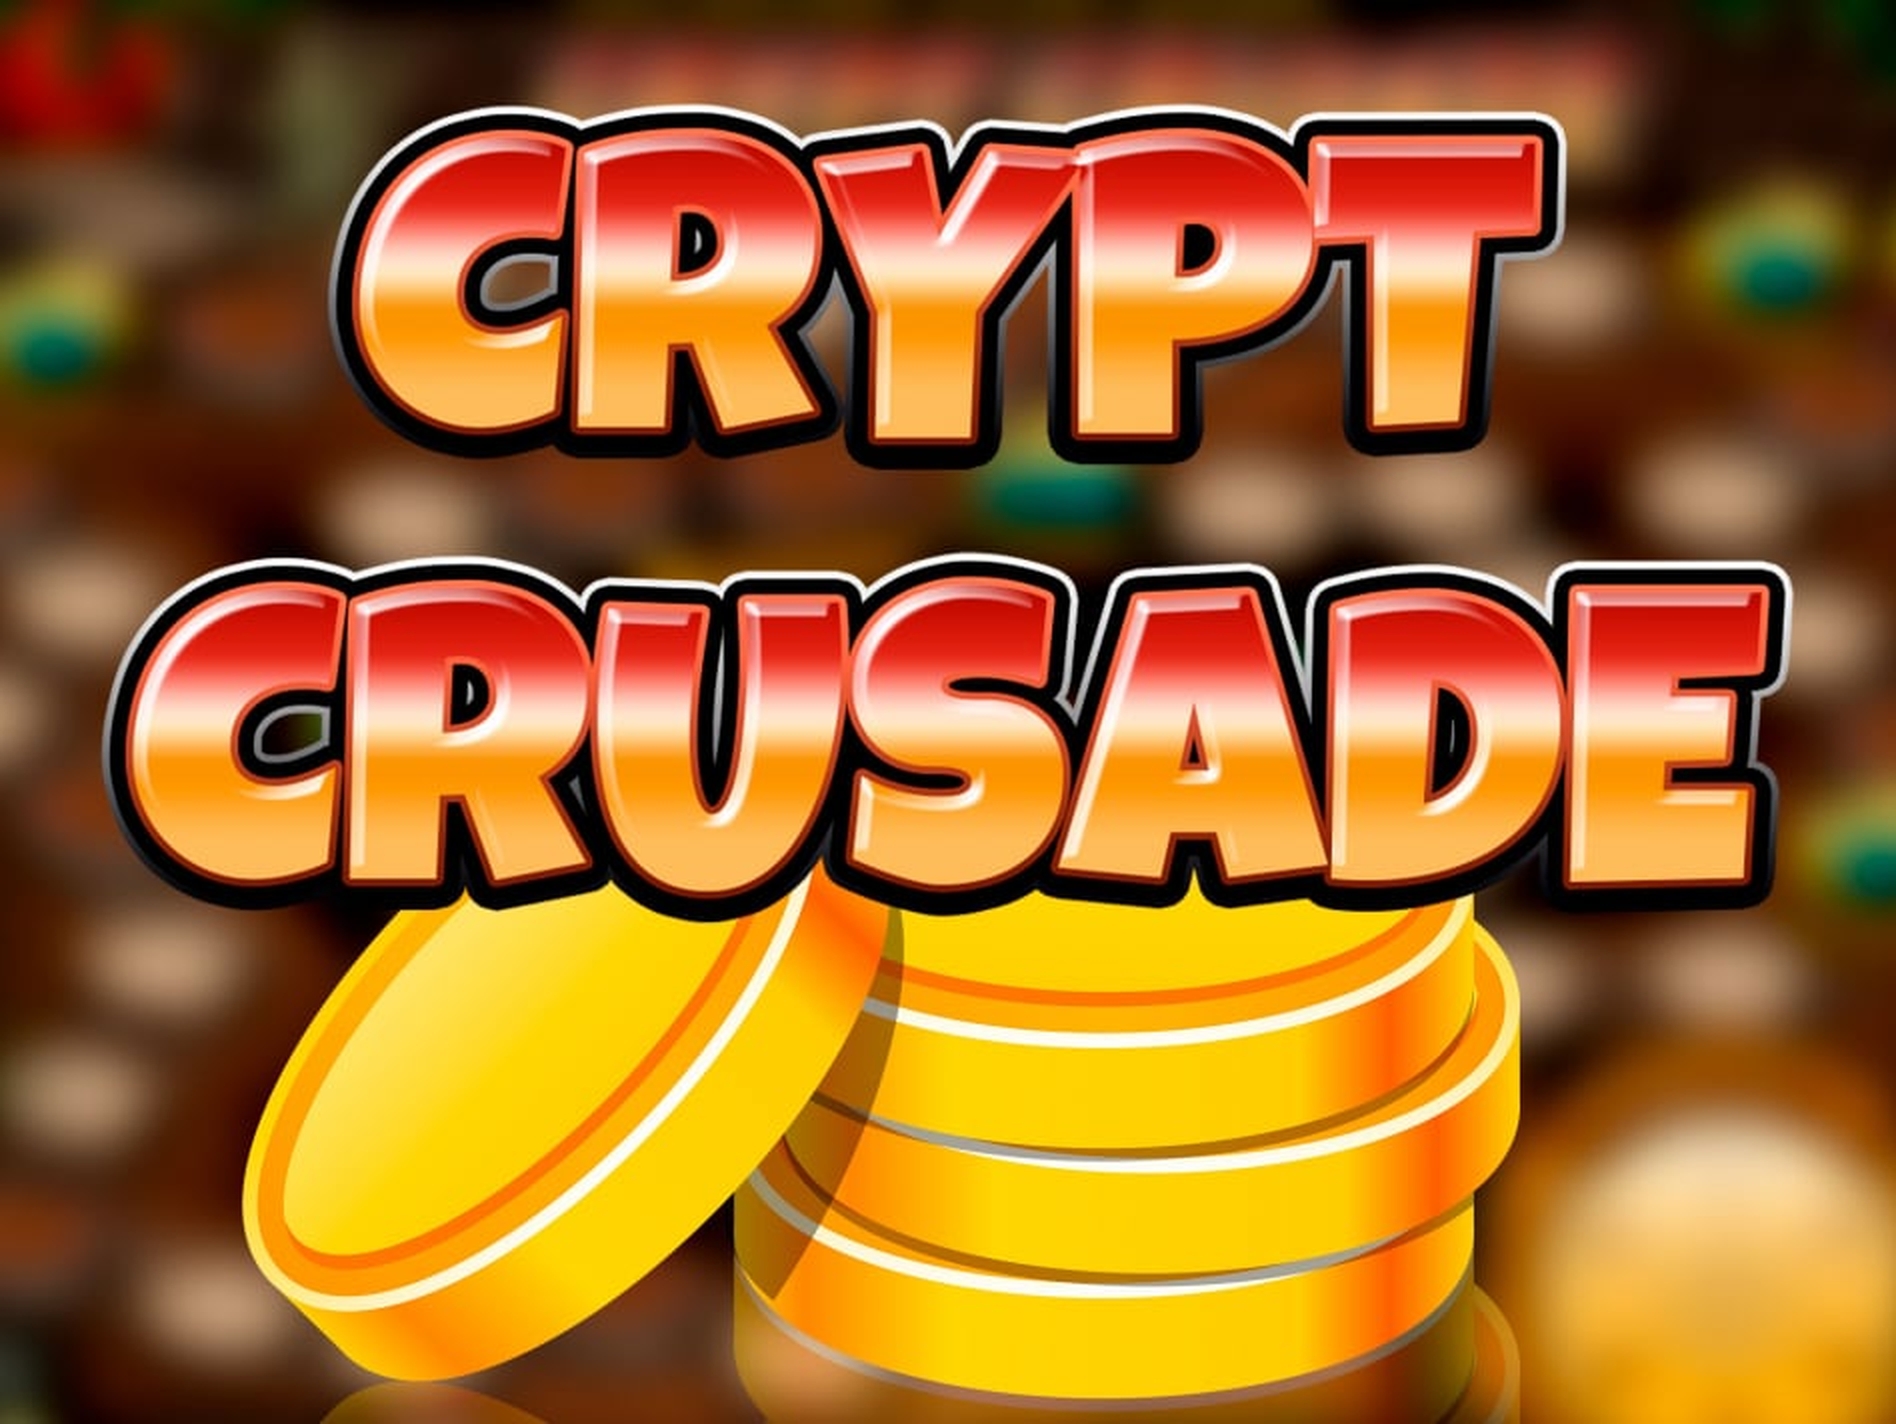 Crypt Crusade